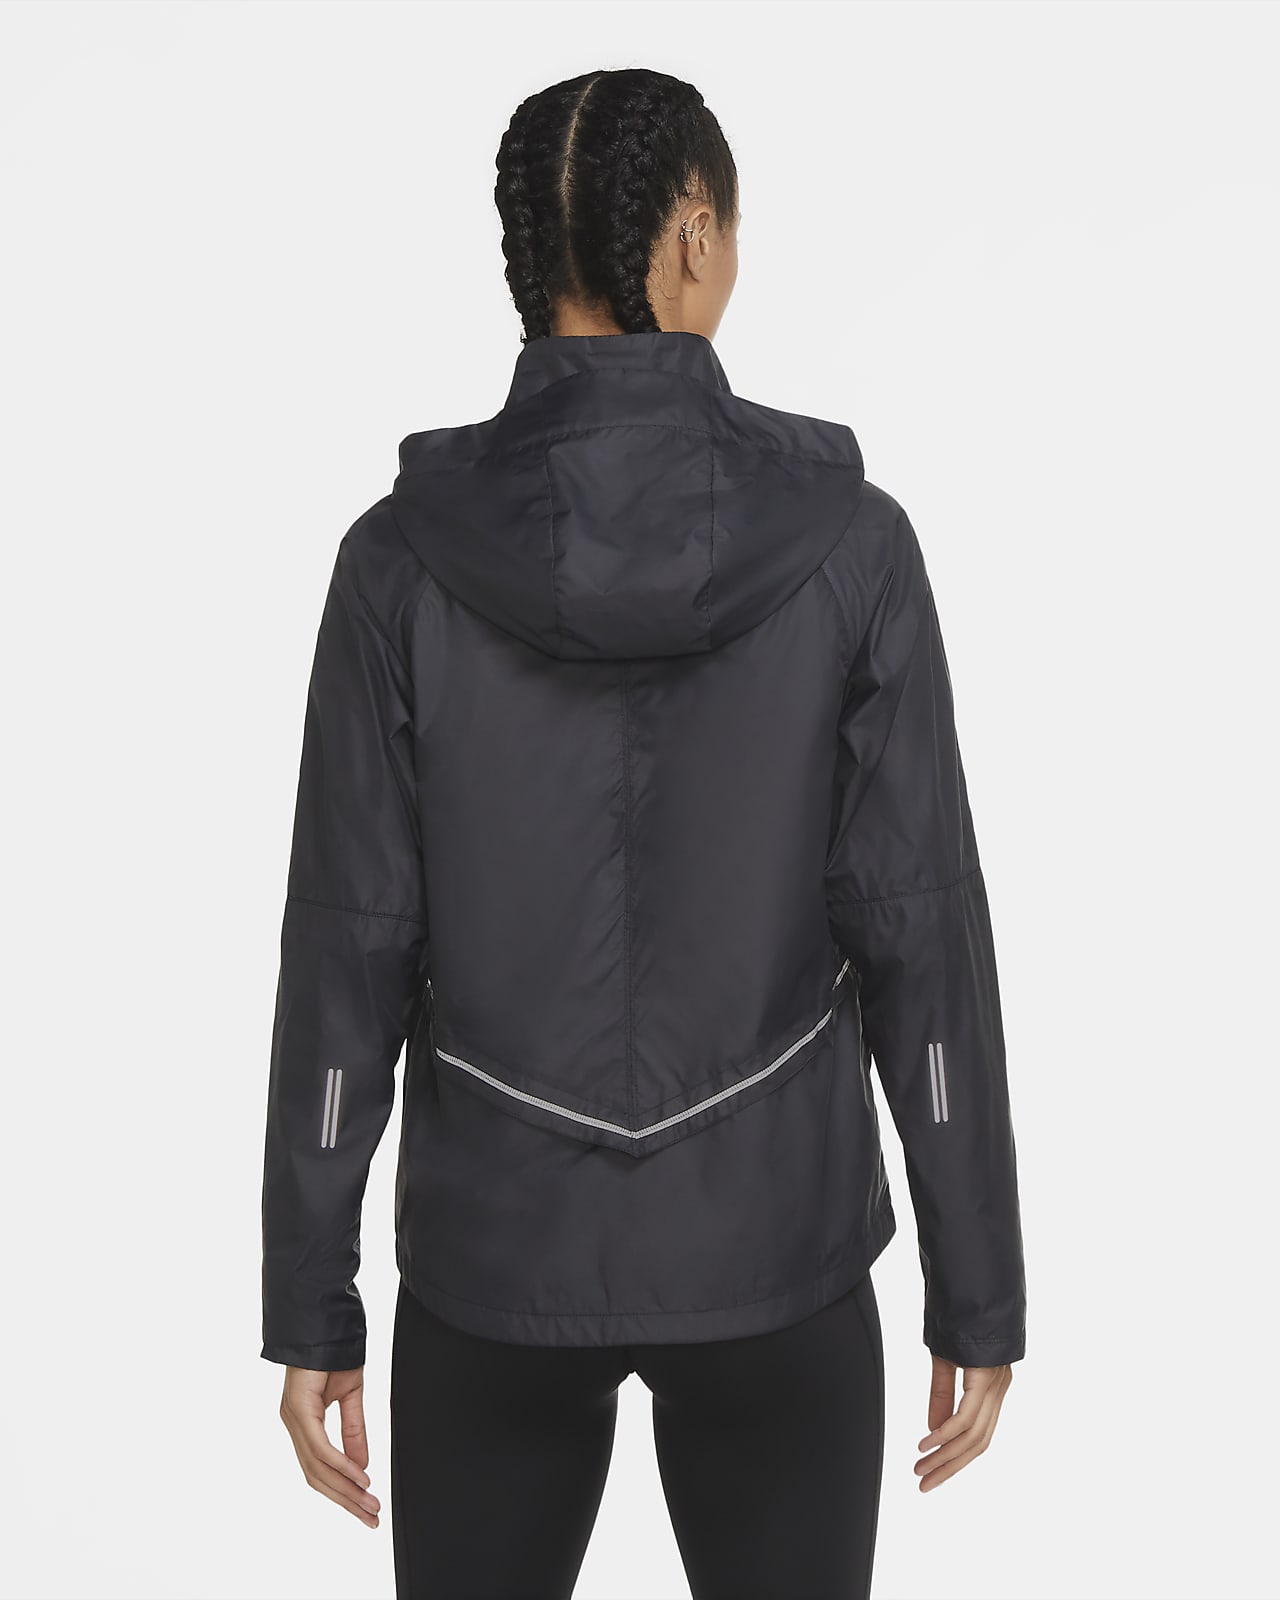 Buy > nike women's aeroshield hooded running jacket > in stock